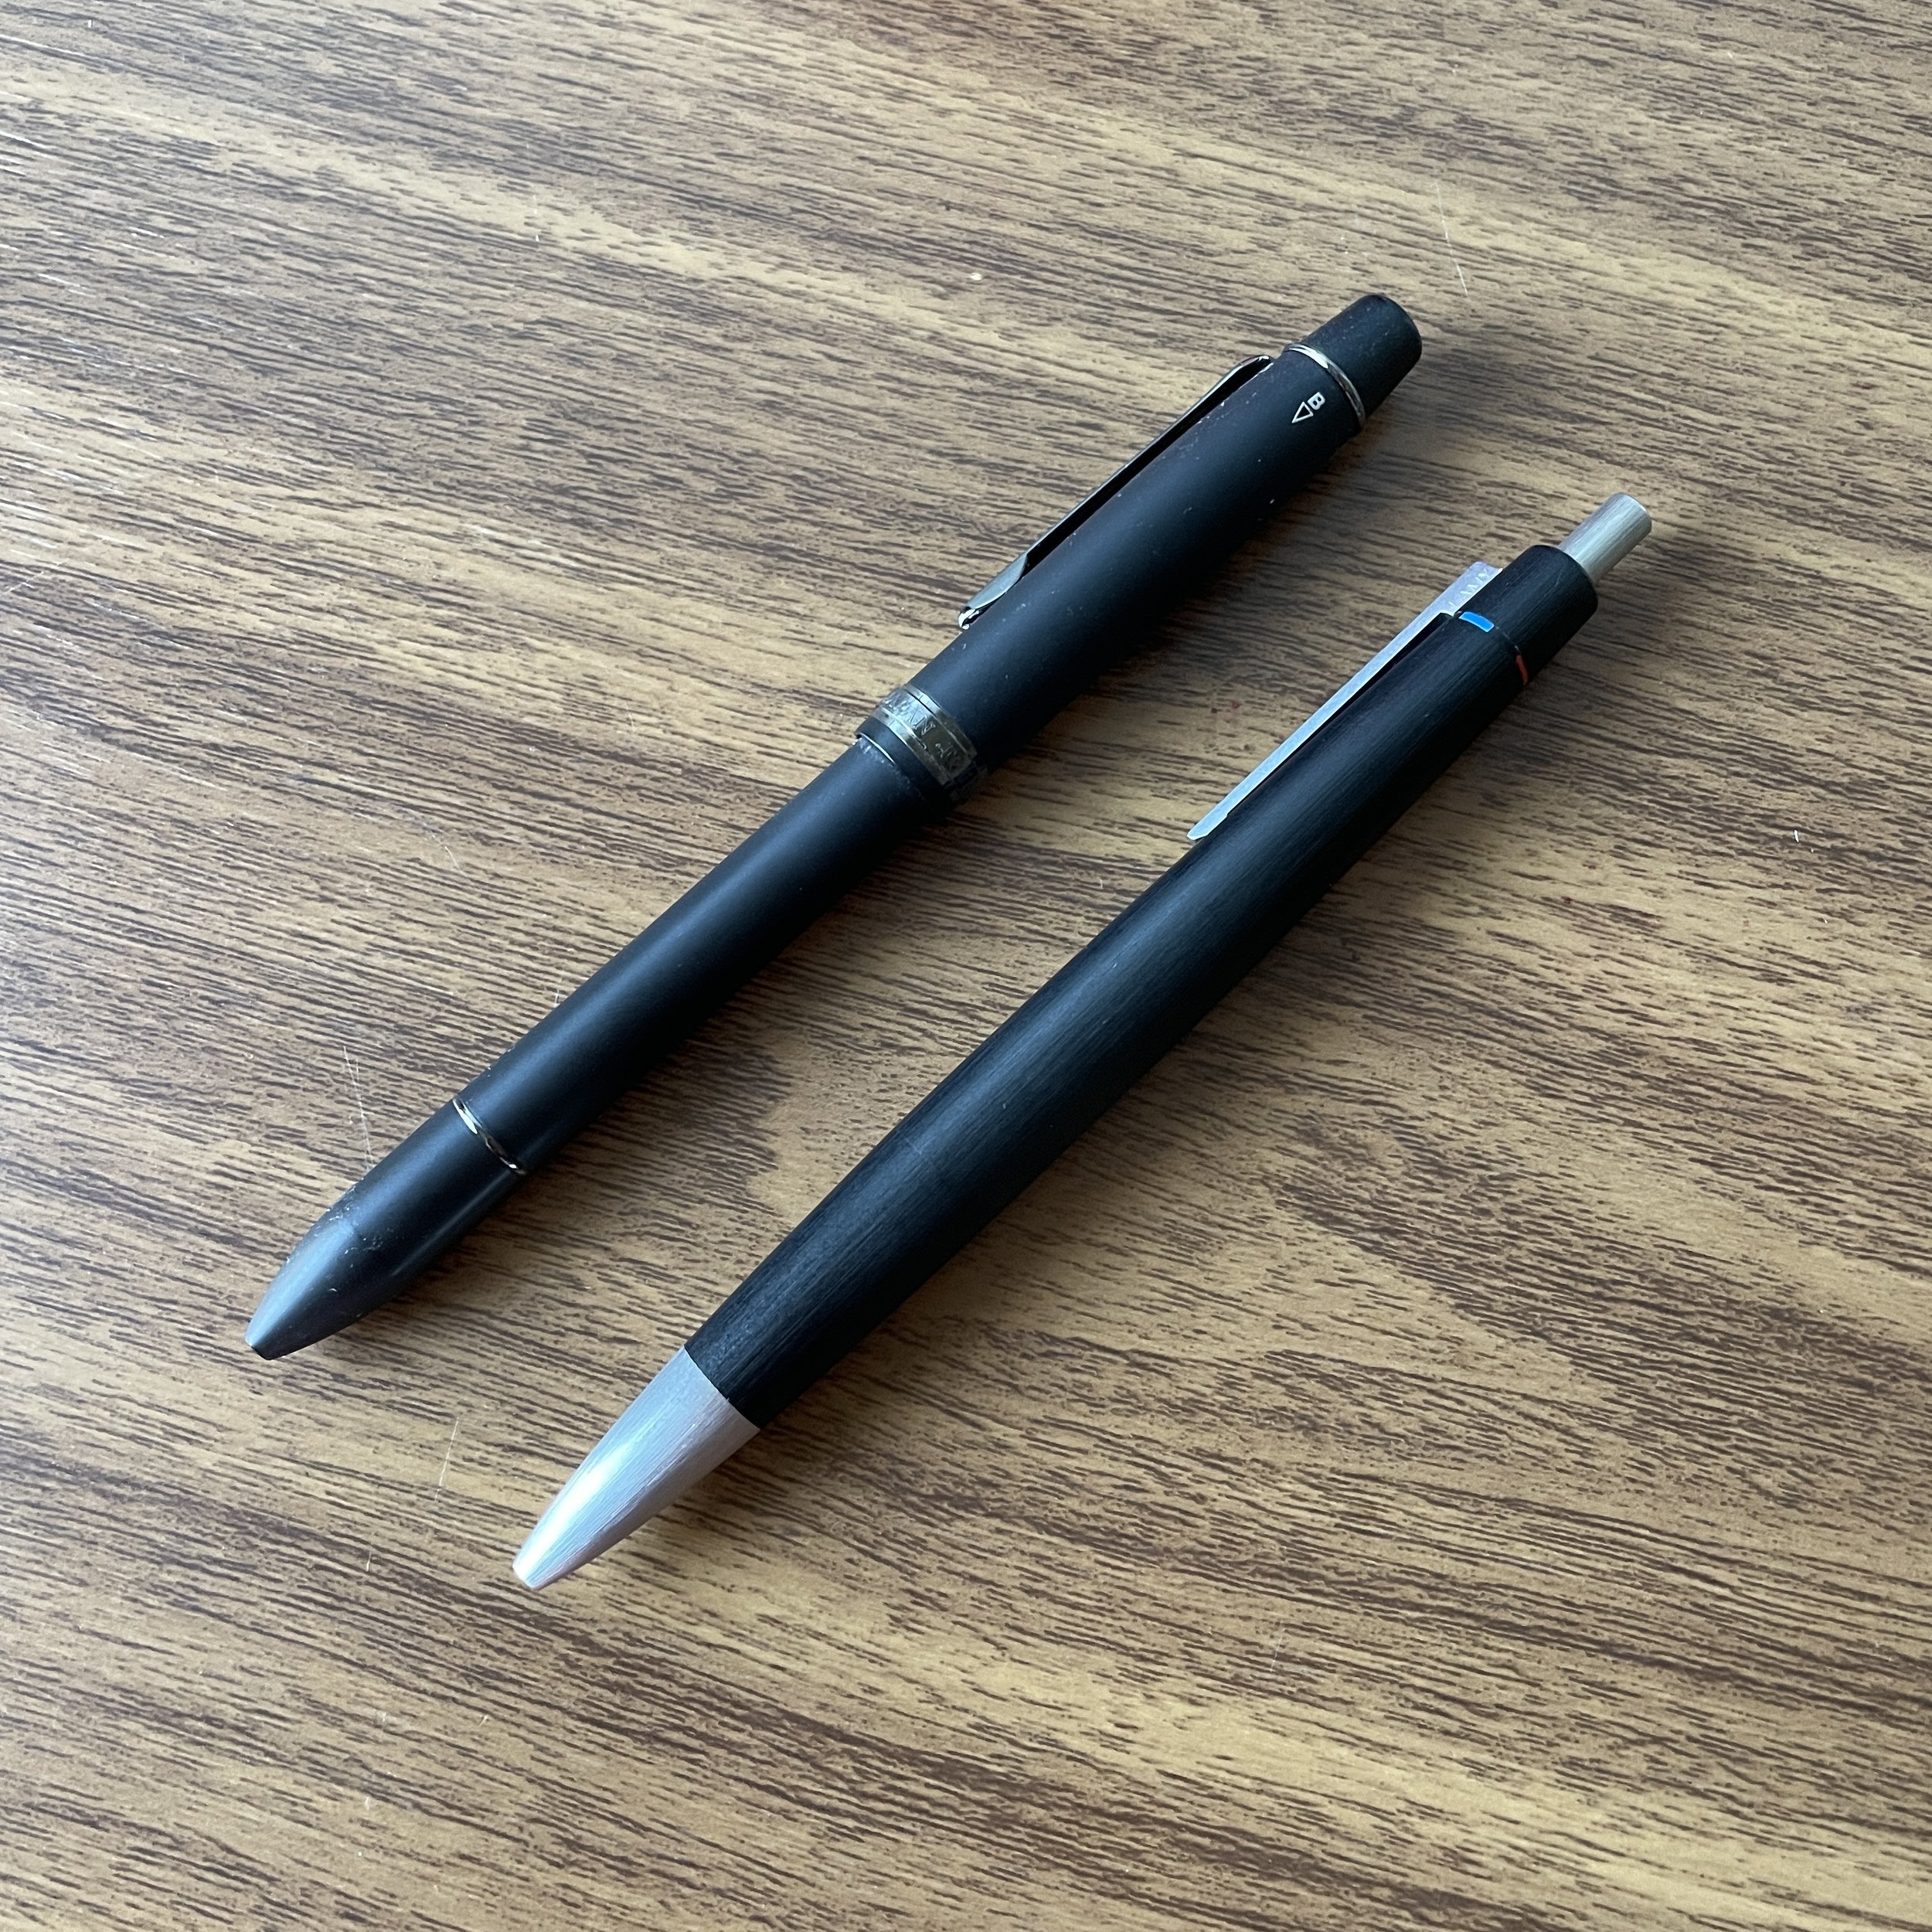 Top Five Pens for Planner Use — The Gentleman Stationer